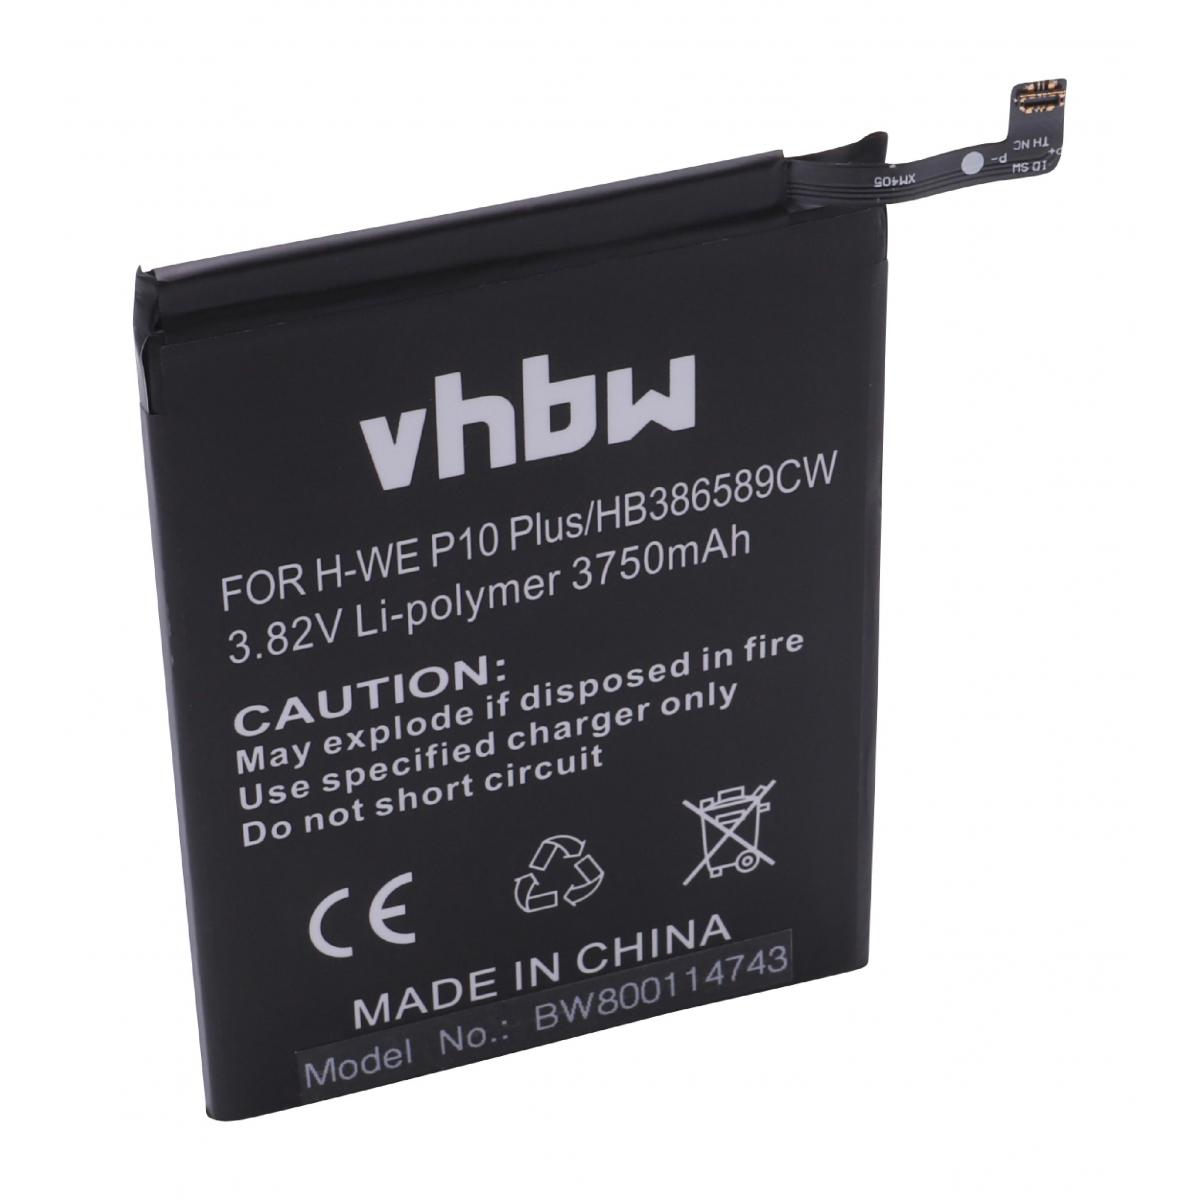 Vhbw - vhbw batterie remplace Huawei HB386589CW, HB386589ECW pour smartphone (3750mAh, 3,82V, Li-polymère) - Batterie téléphone